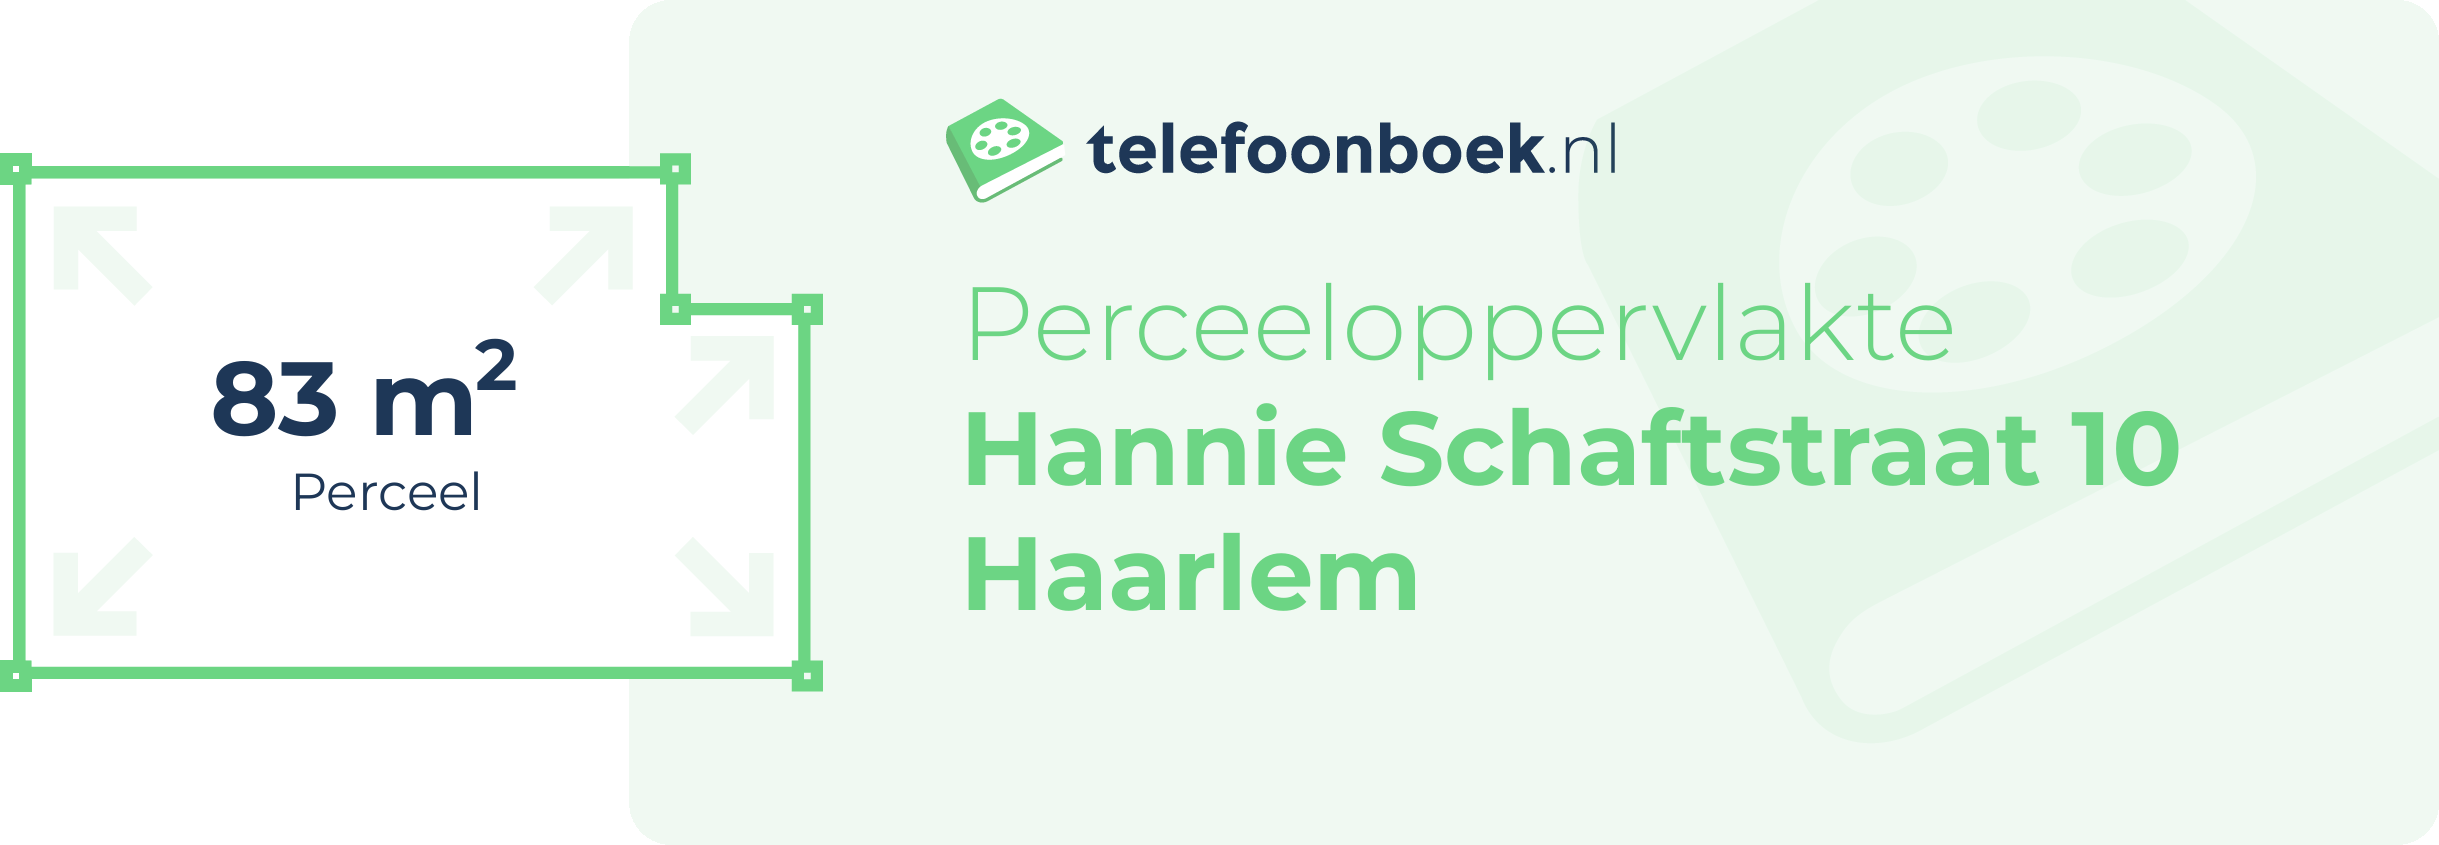 Perceeloppervlakte Hannie Schaftstraat 10 Haarlem